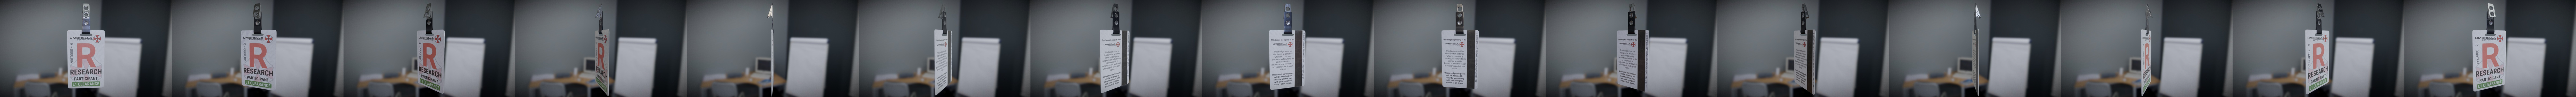 Umbrella Level 1 ID Card (Resident Evil) - Download Free 3D model